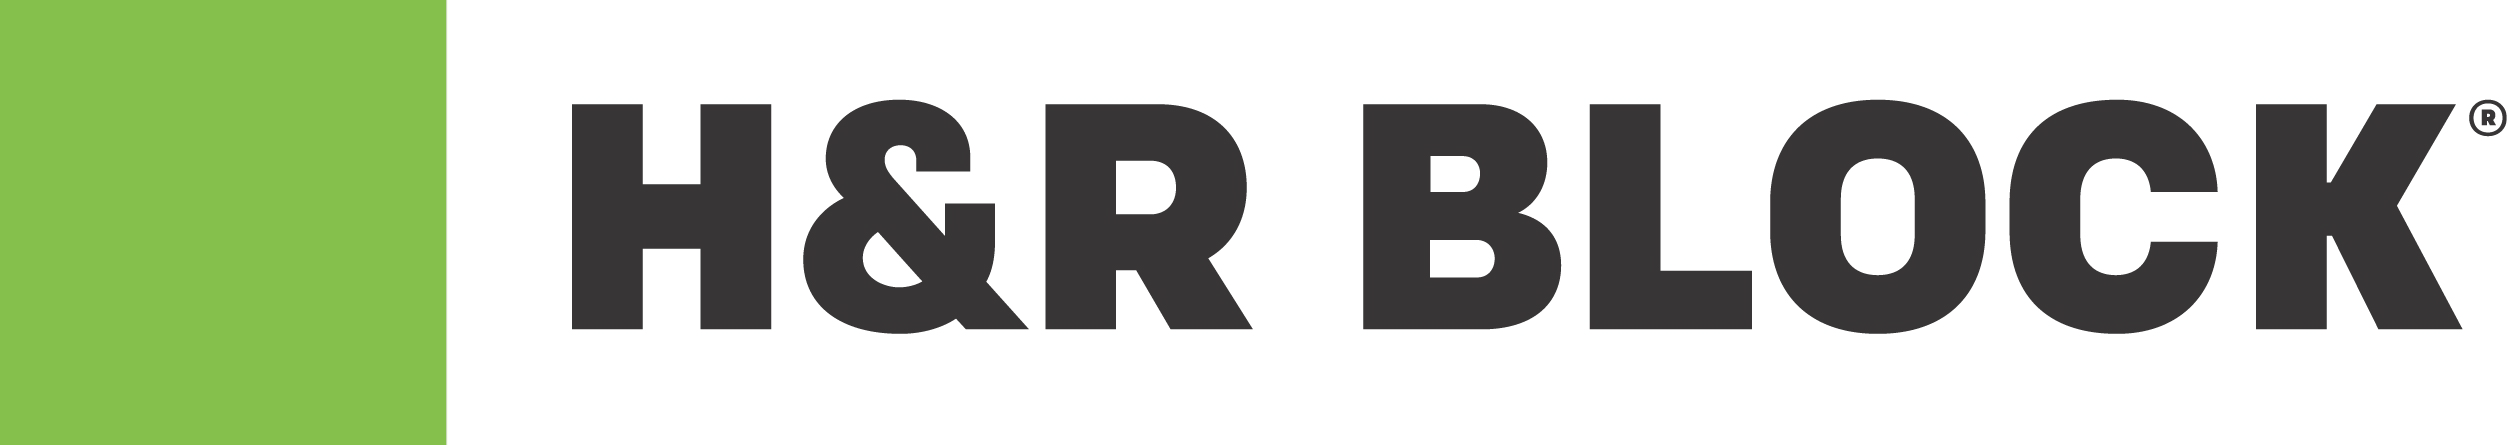 H&R Block Logo - LogoDix